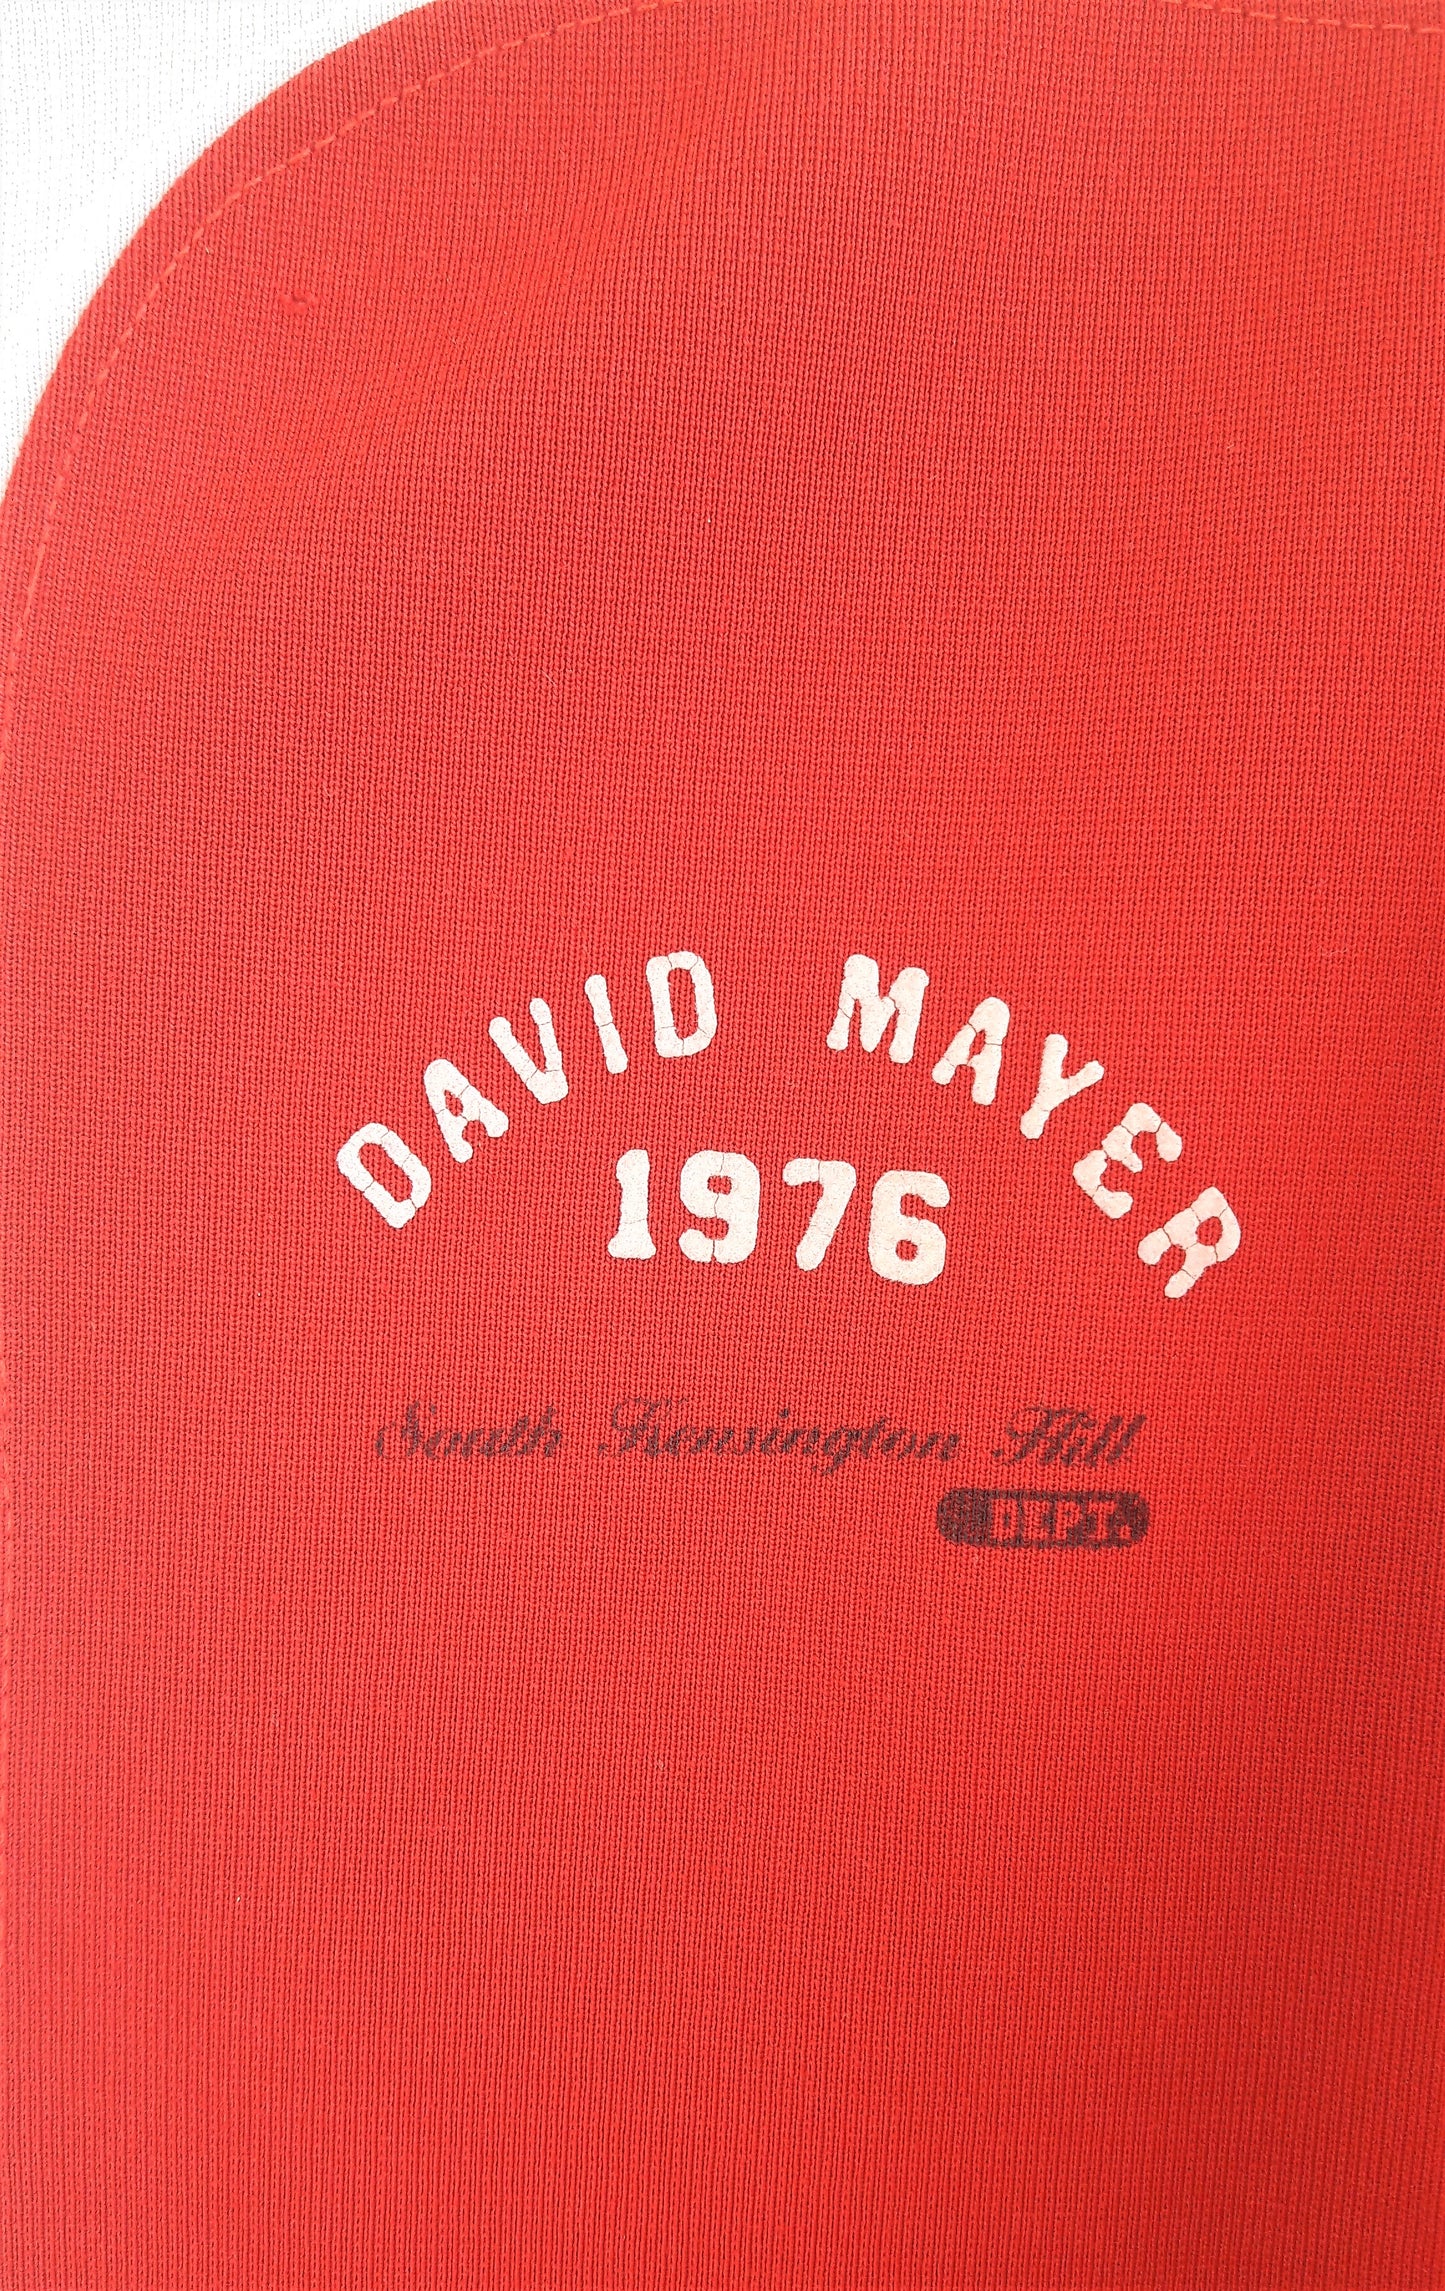 Retro David Mayer Zip Up Sweater